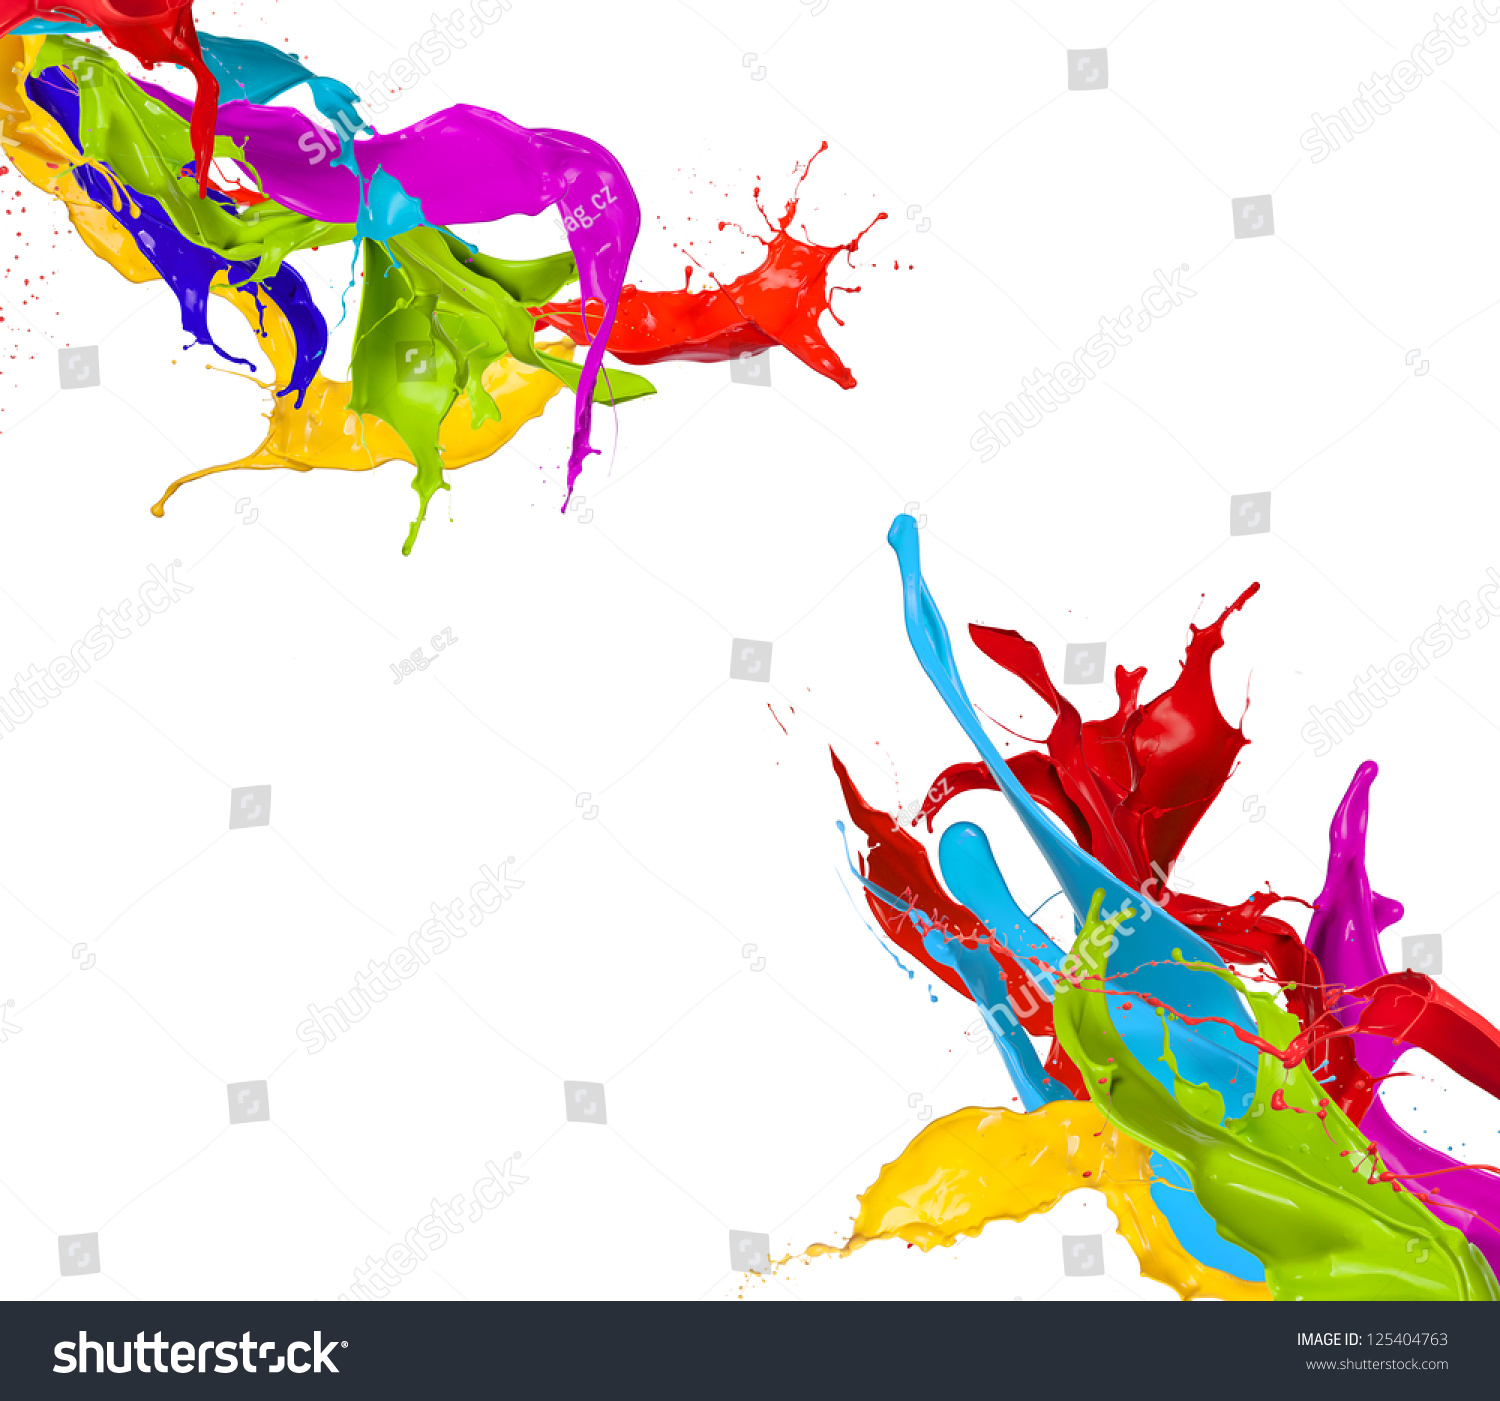 PowerPoint Template paint splatter colored splashes (ijmlhlonk)